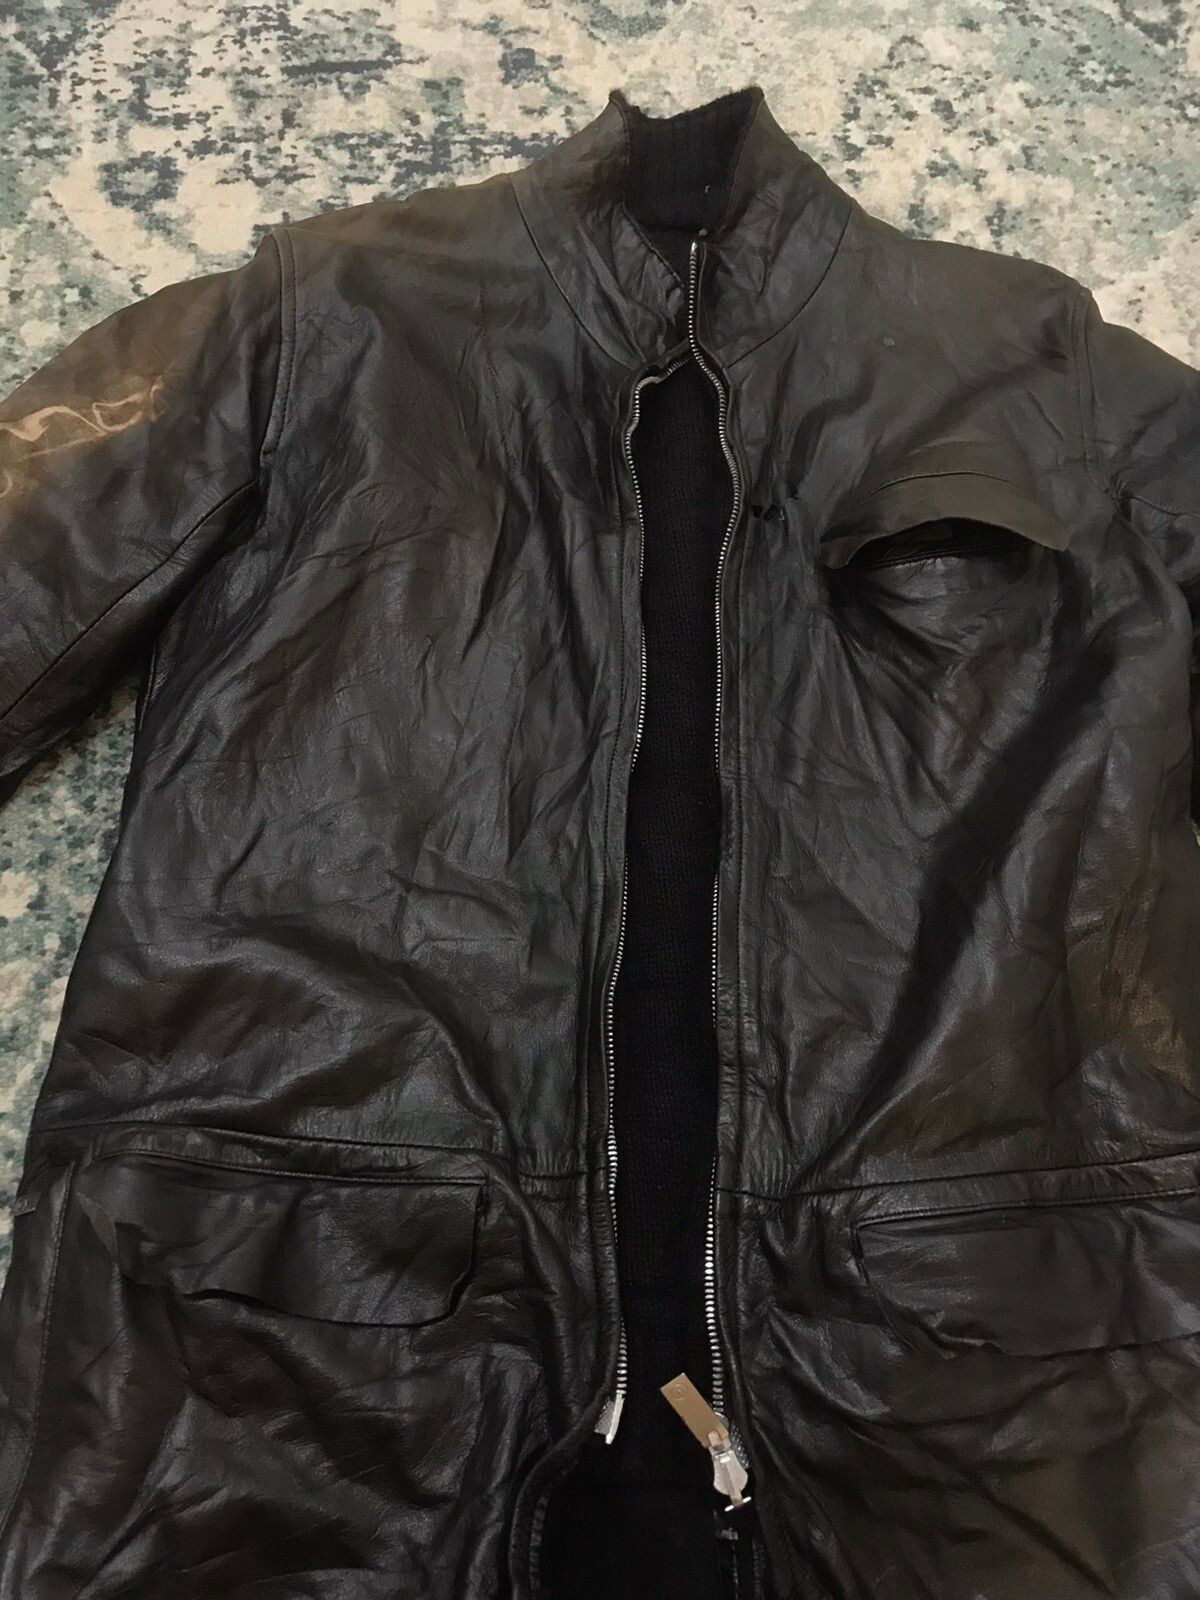 AW99 Undercover Ambivalence Cow Leather Coat - Size Medium - 15